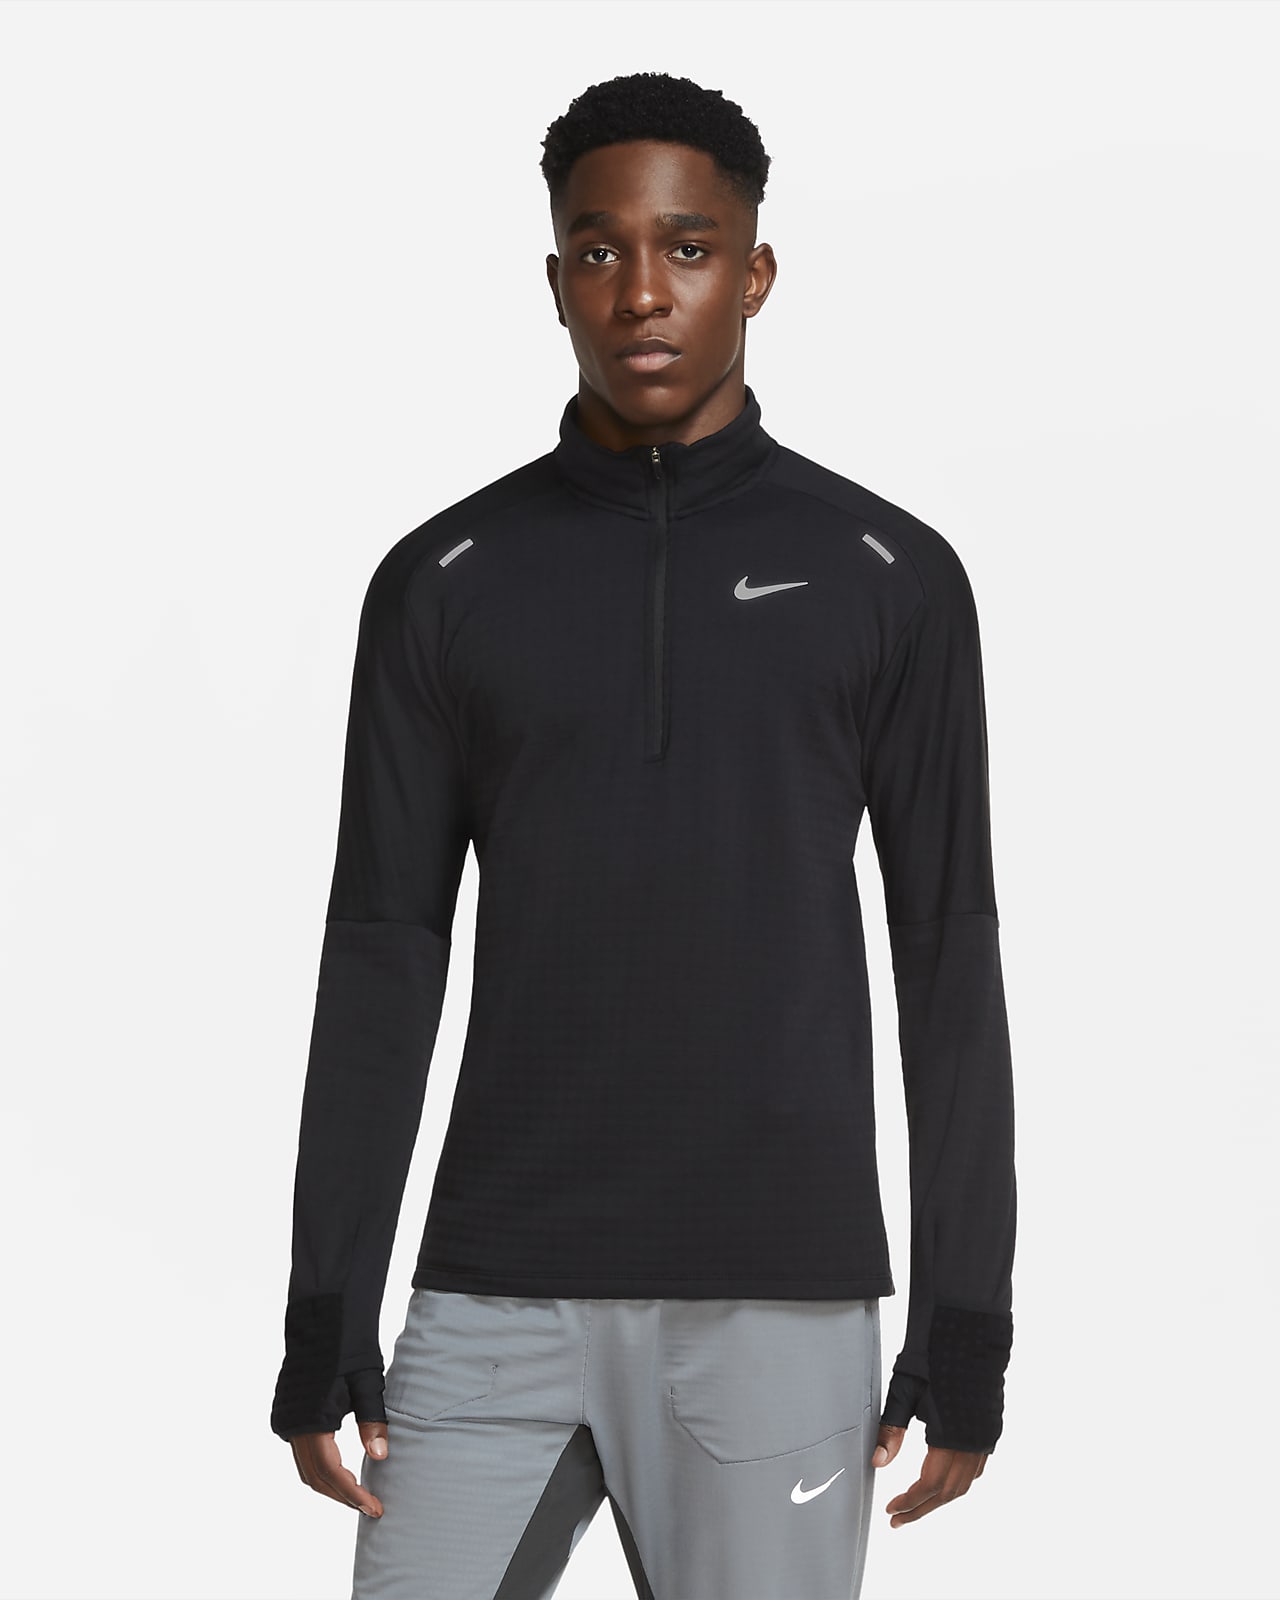 Nike Sphere løpeoverdel med glidelås i halsen til herre